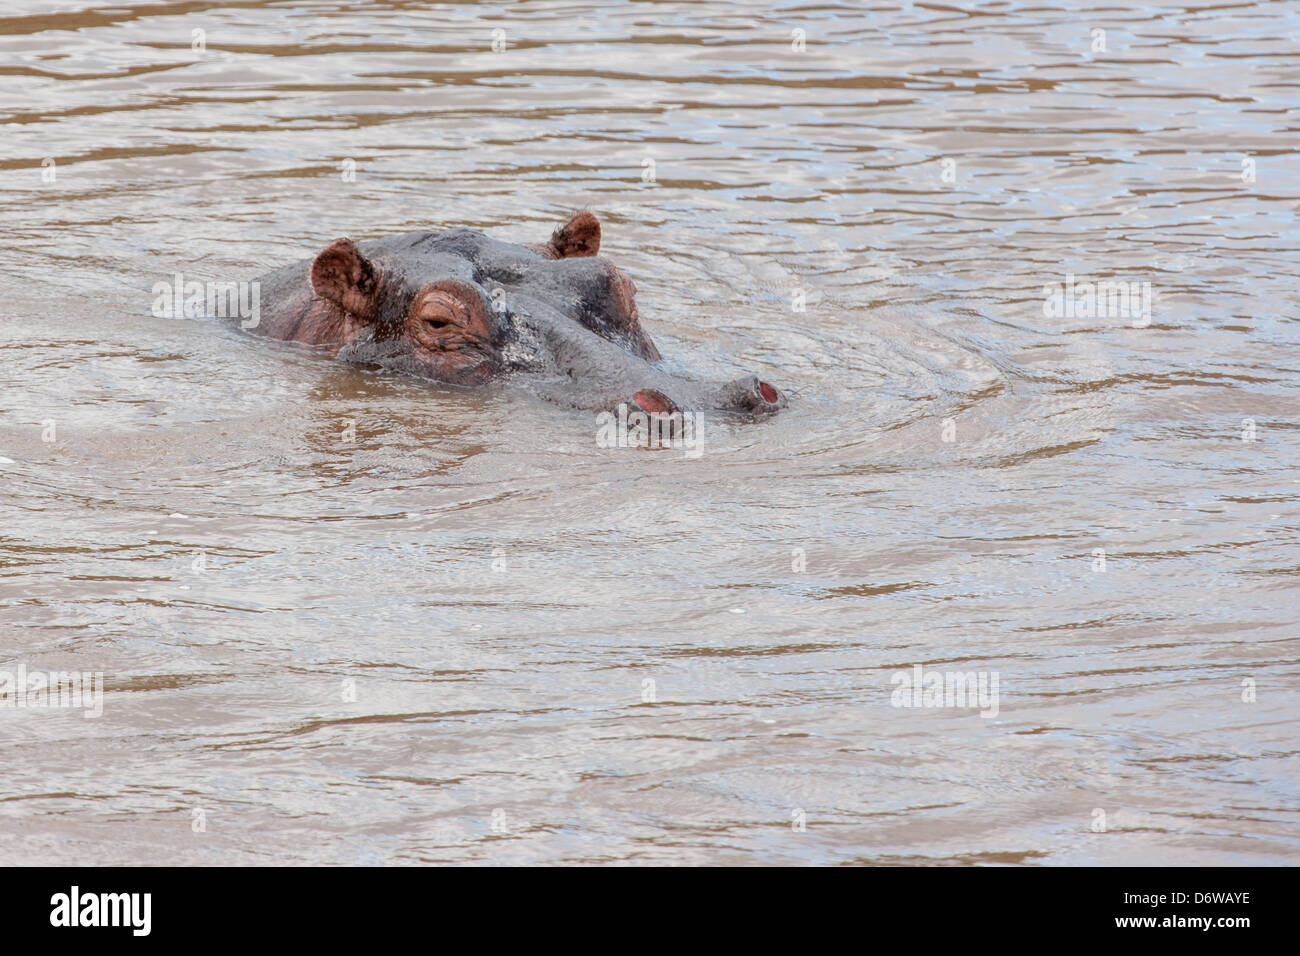 Hippo semi-submerged in river Stock Photo